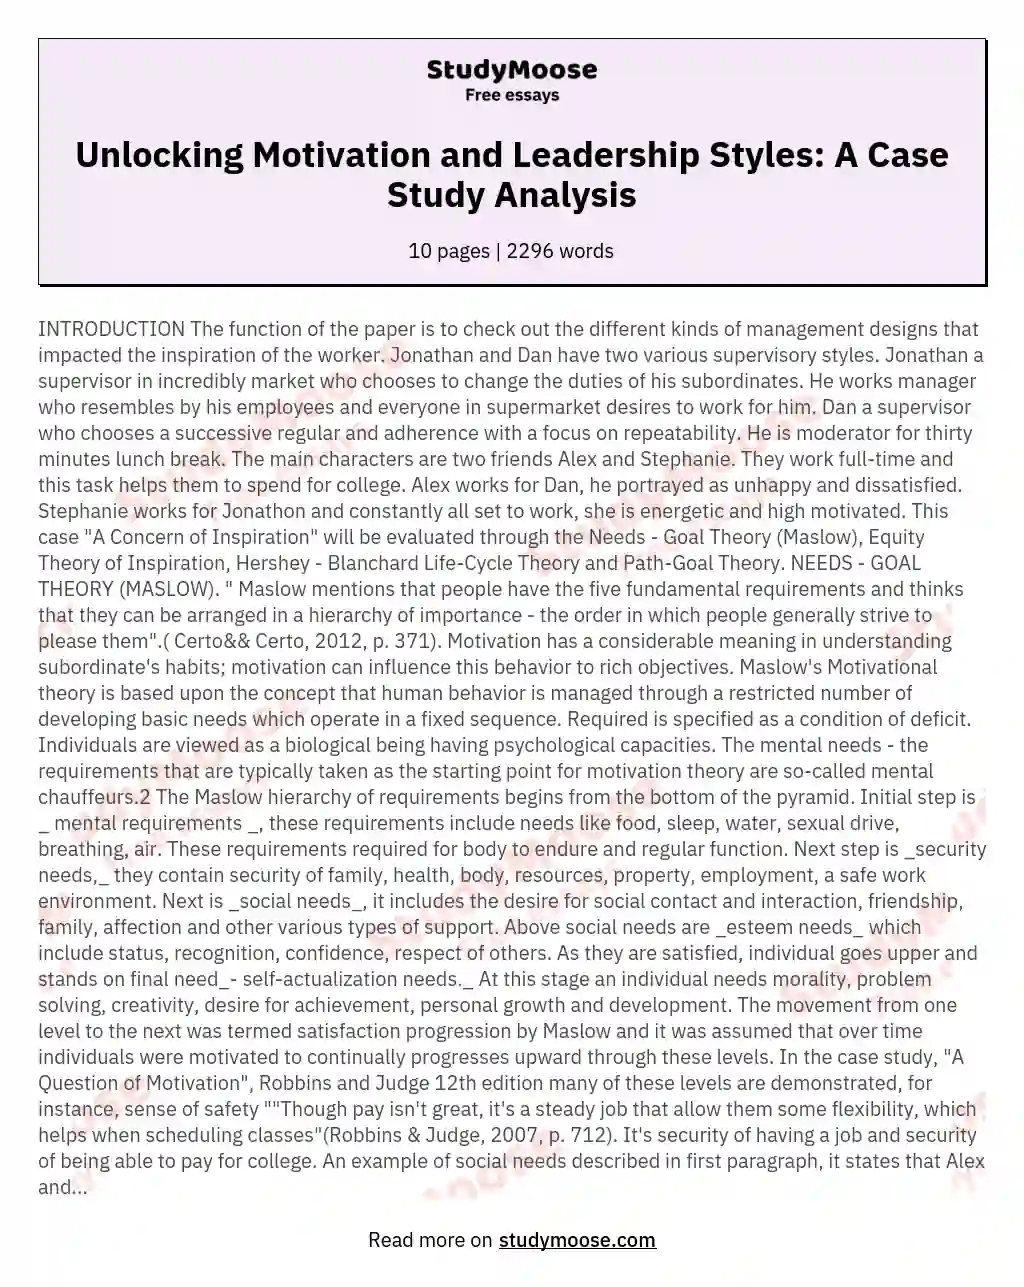 Unlocking Motivation and Leadership Styles: A Case Study Analysis essay